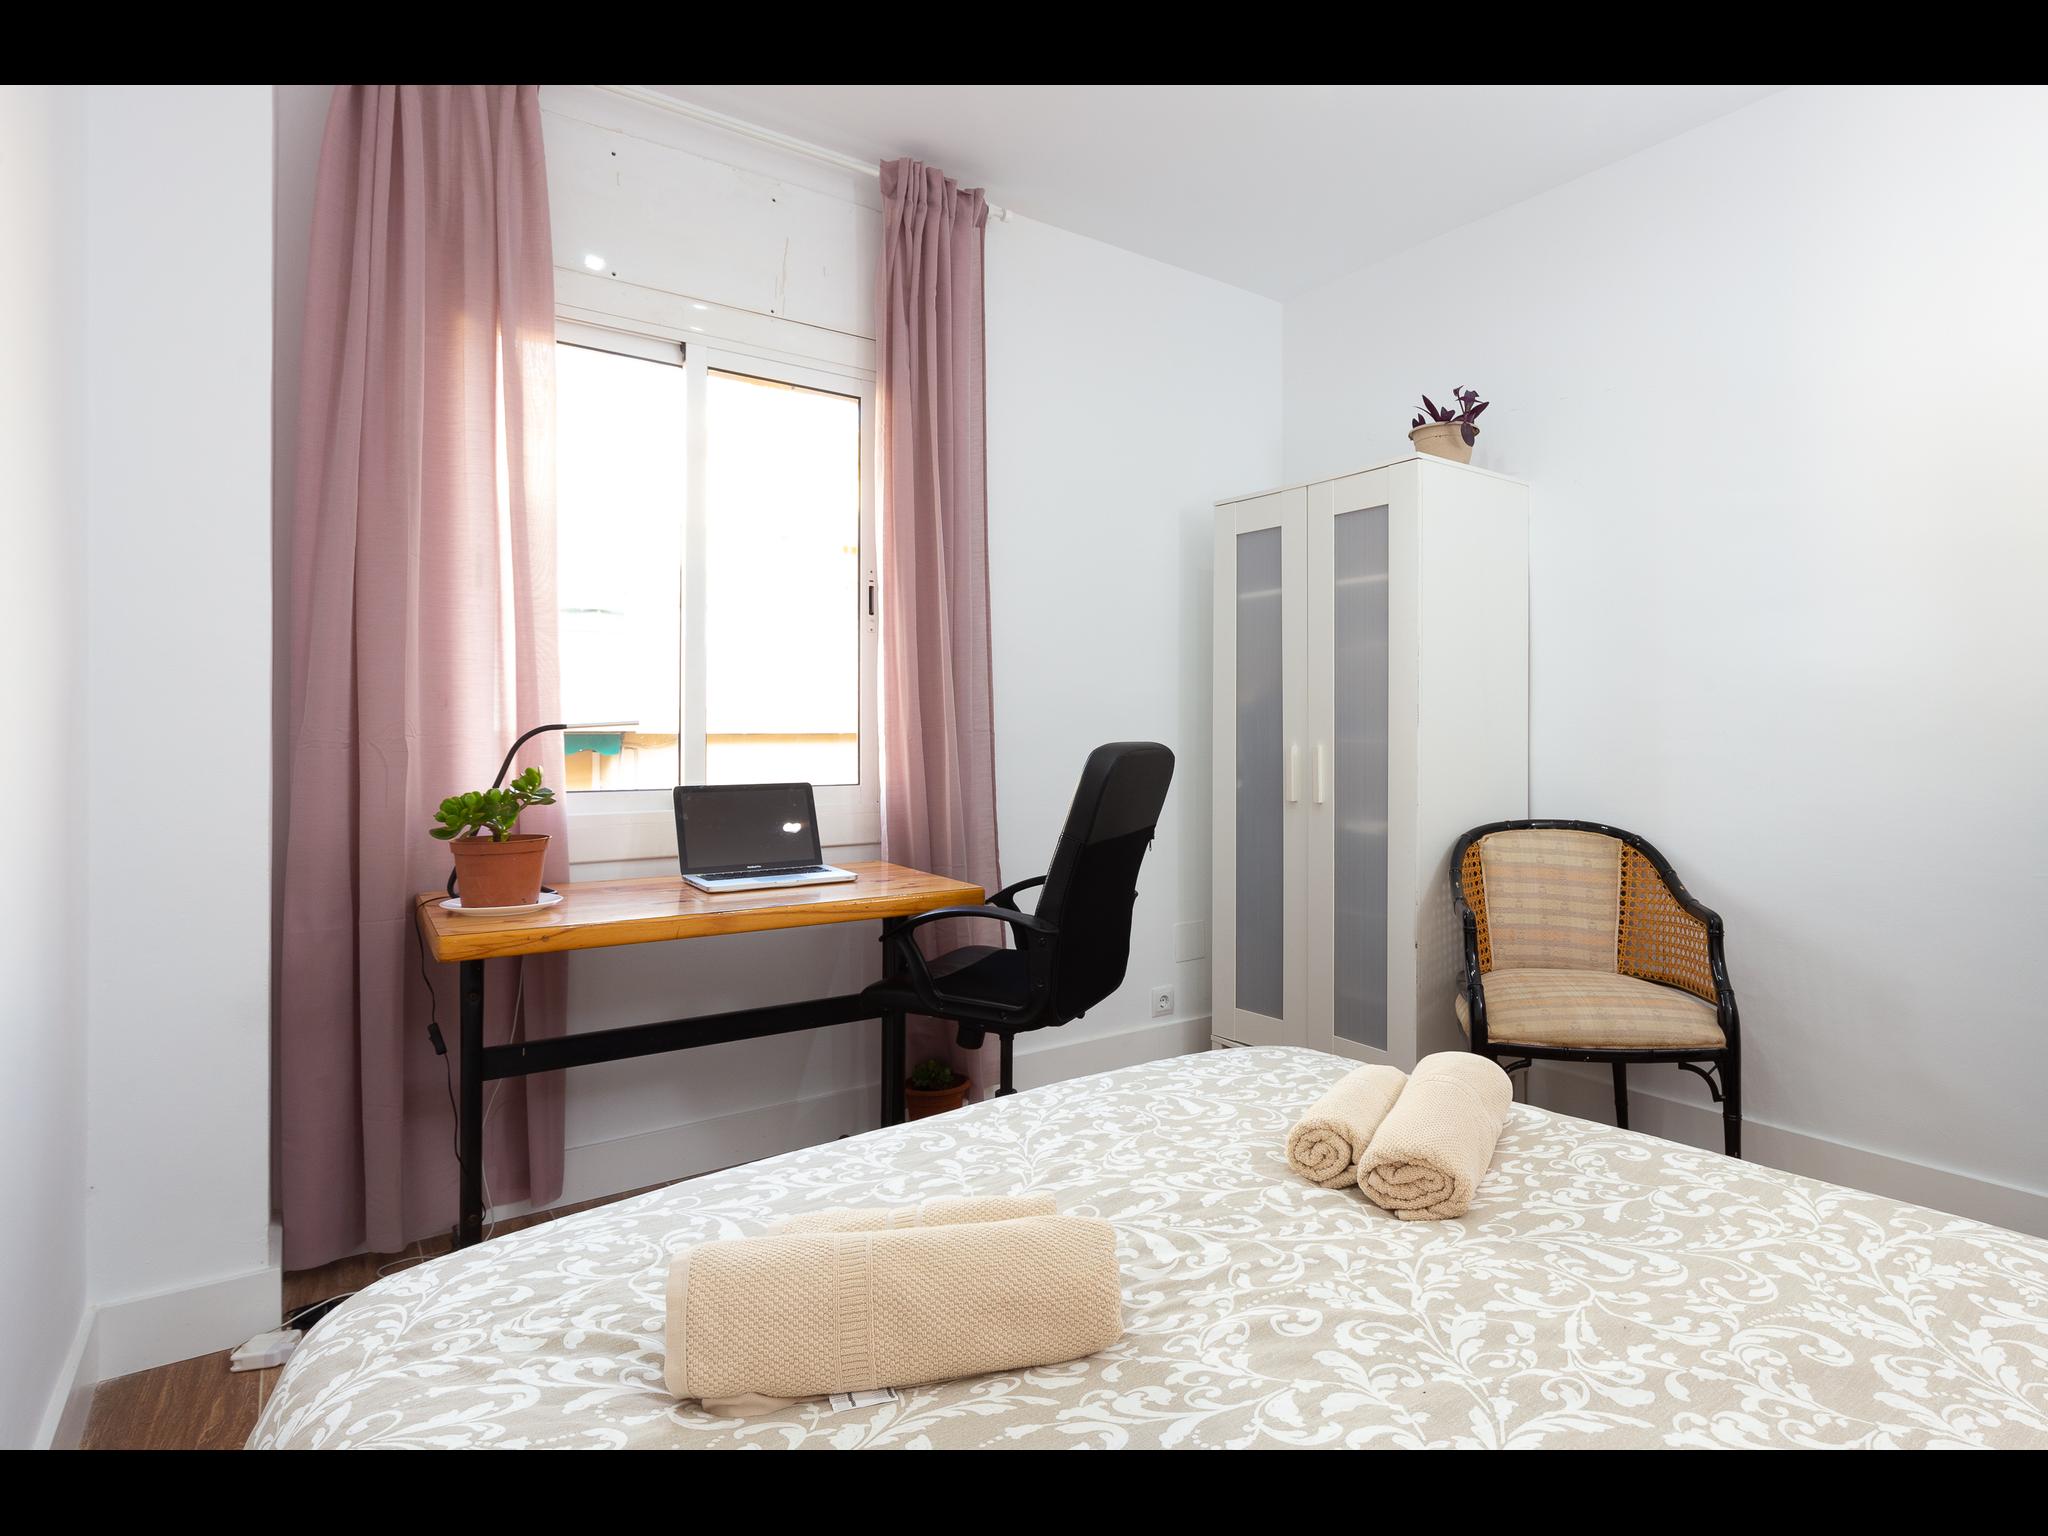 Piquer - One bedroom apartment Barcelona